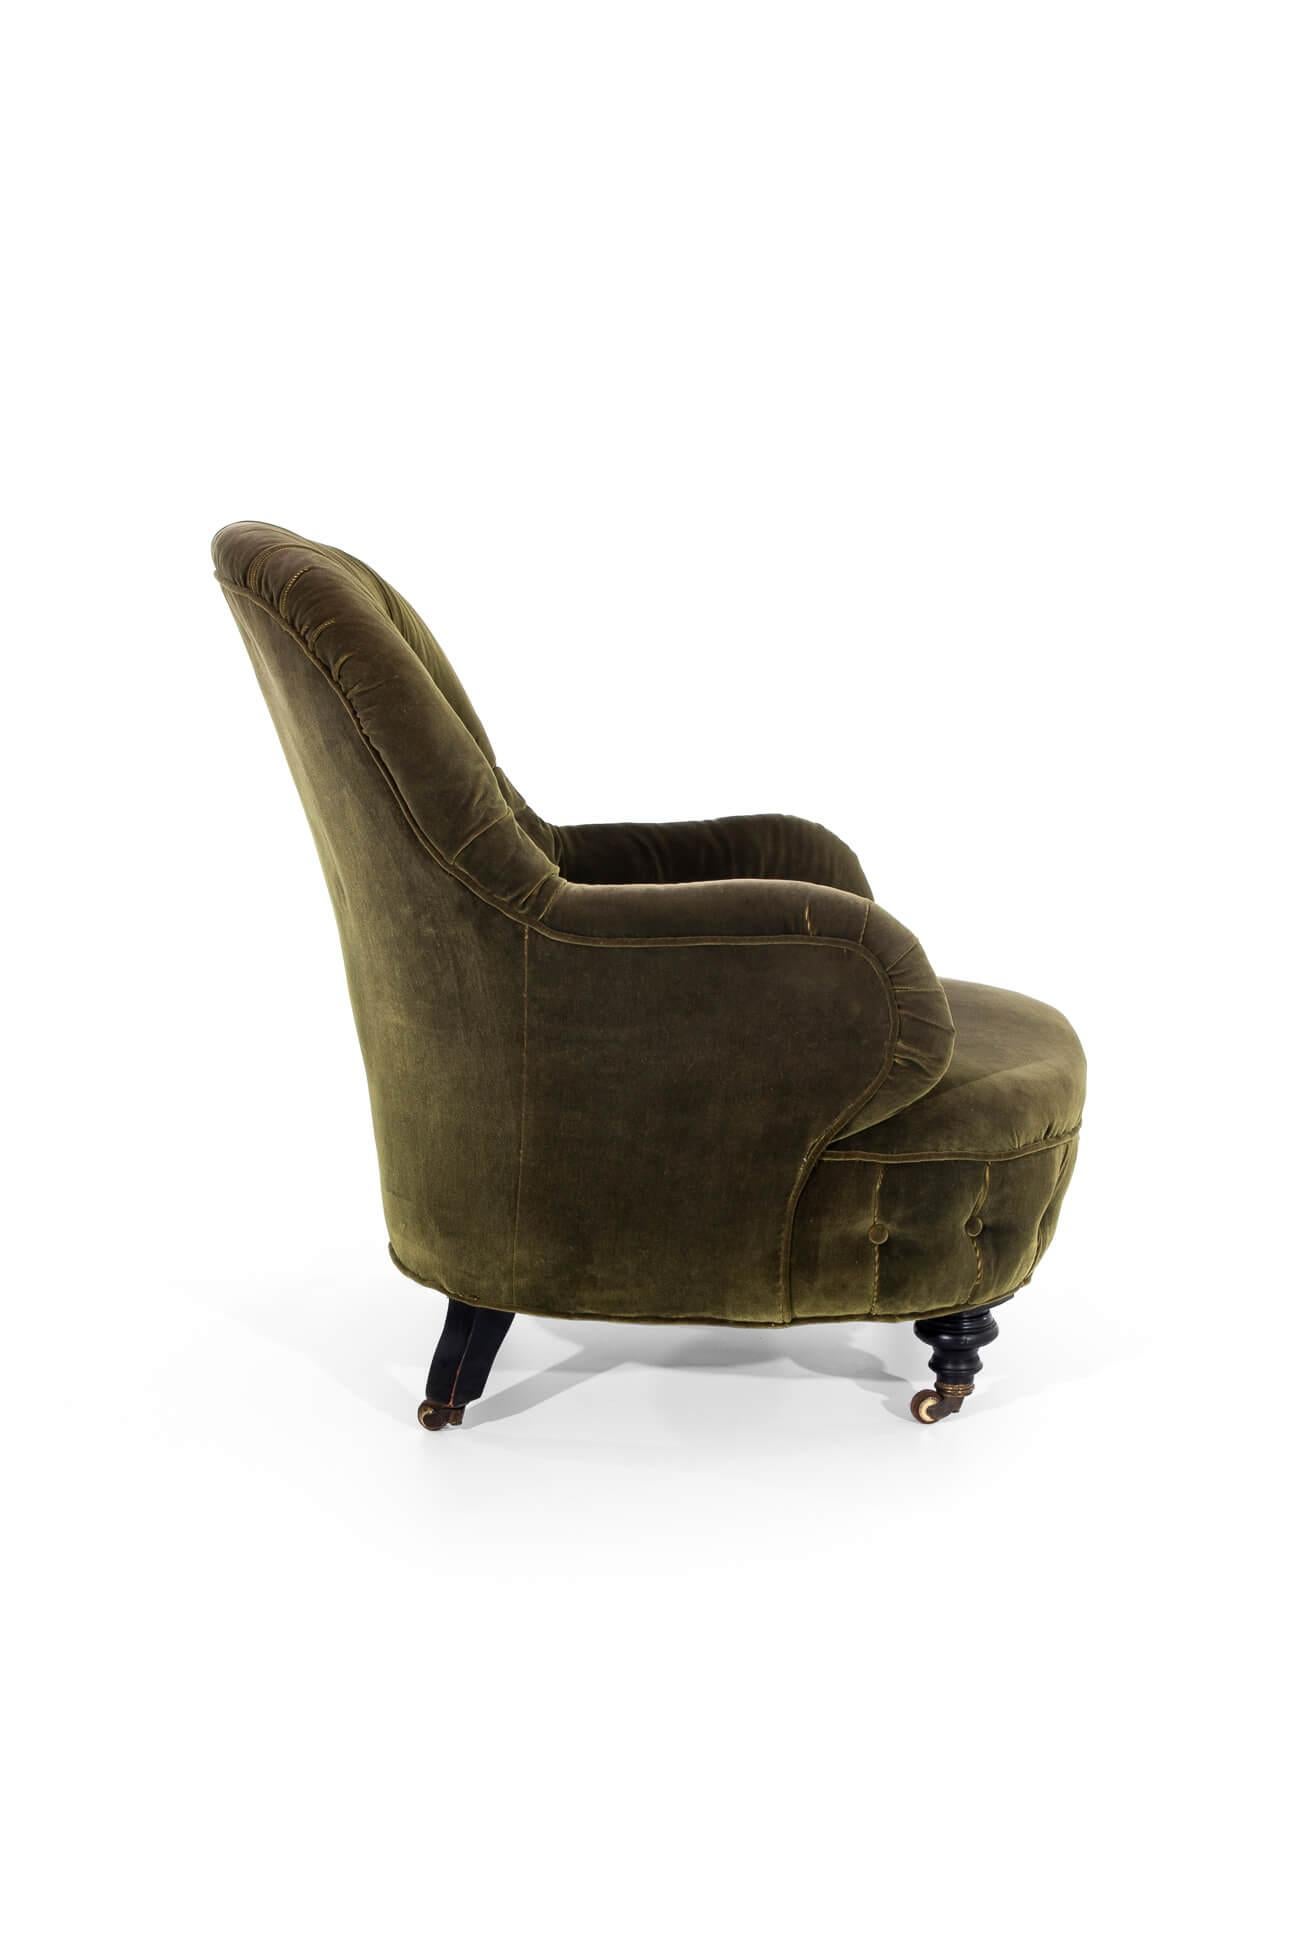 High Victorian Green Velvet Salon Chair